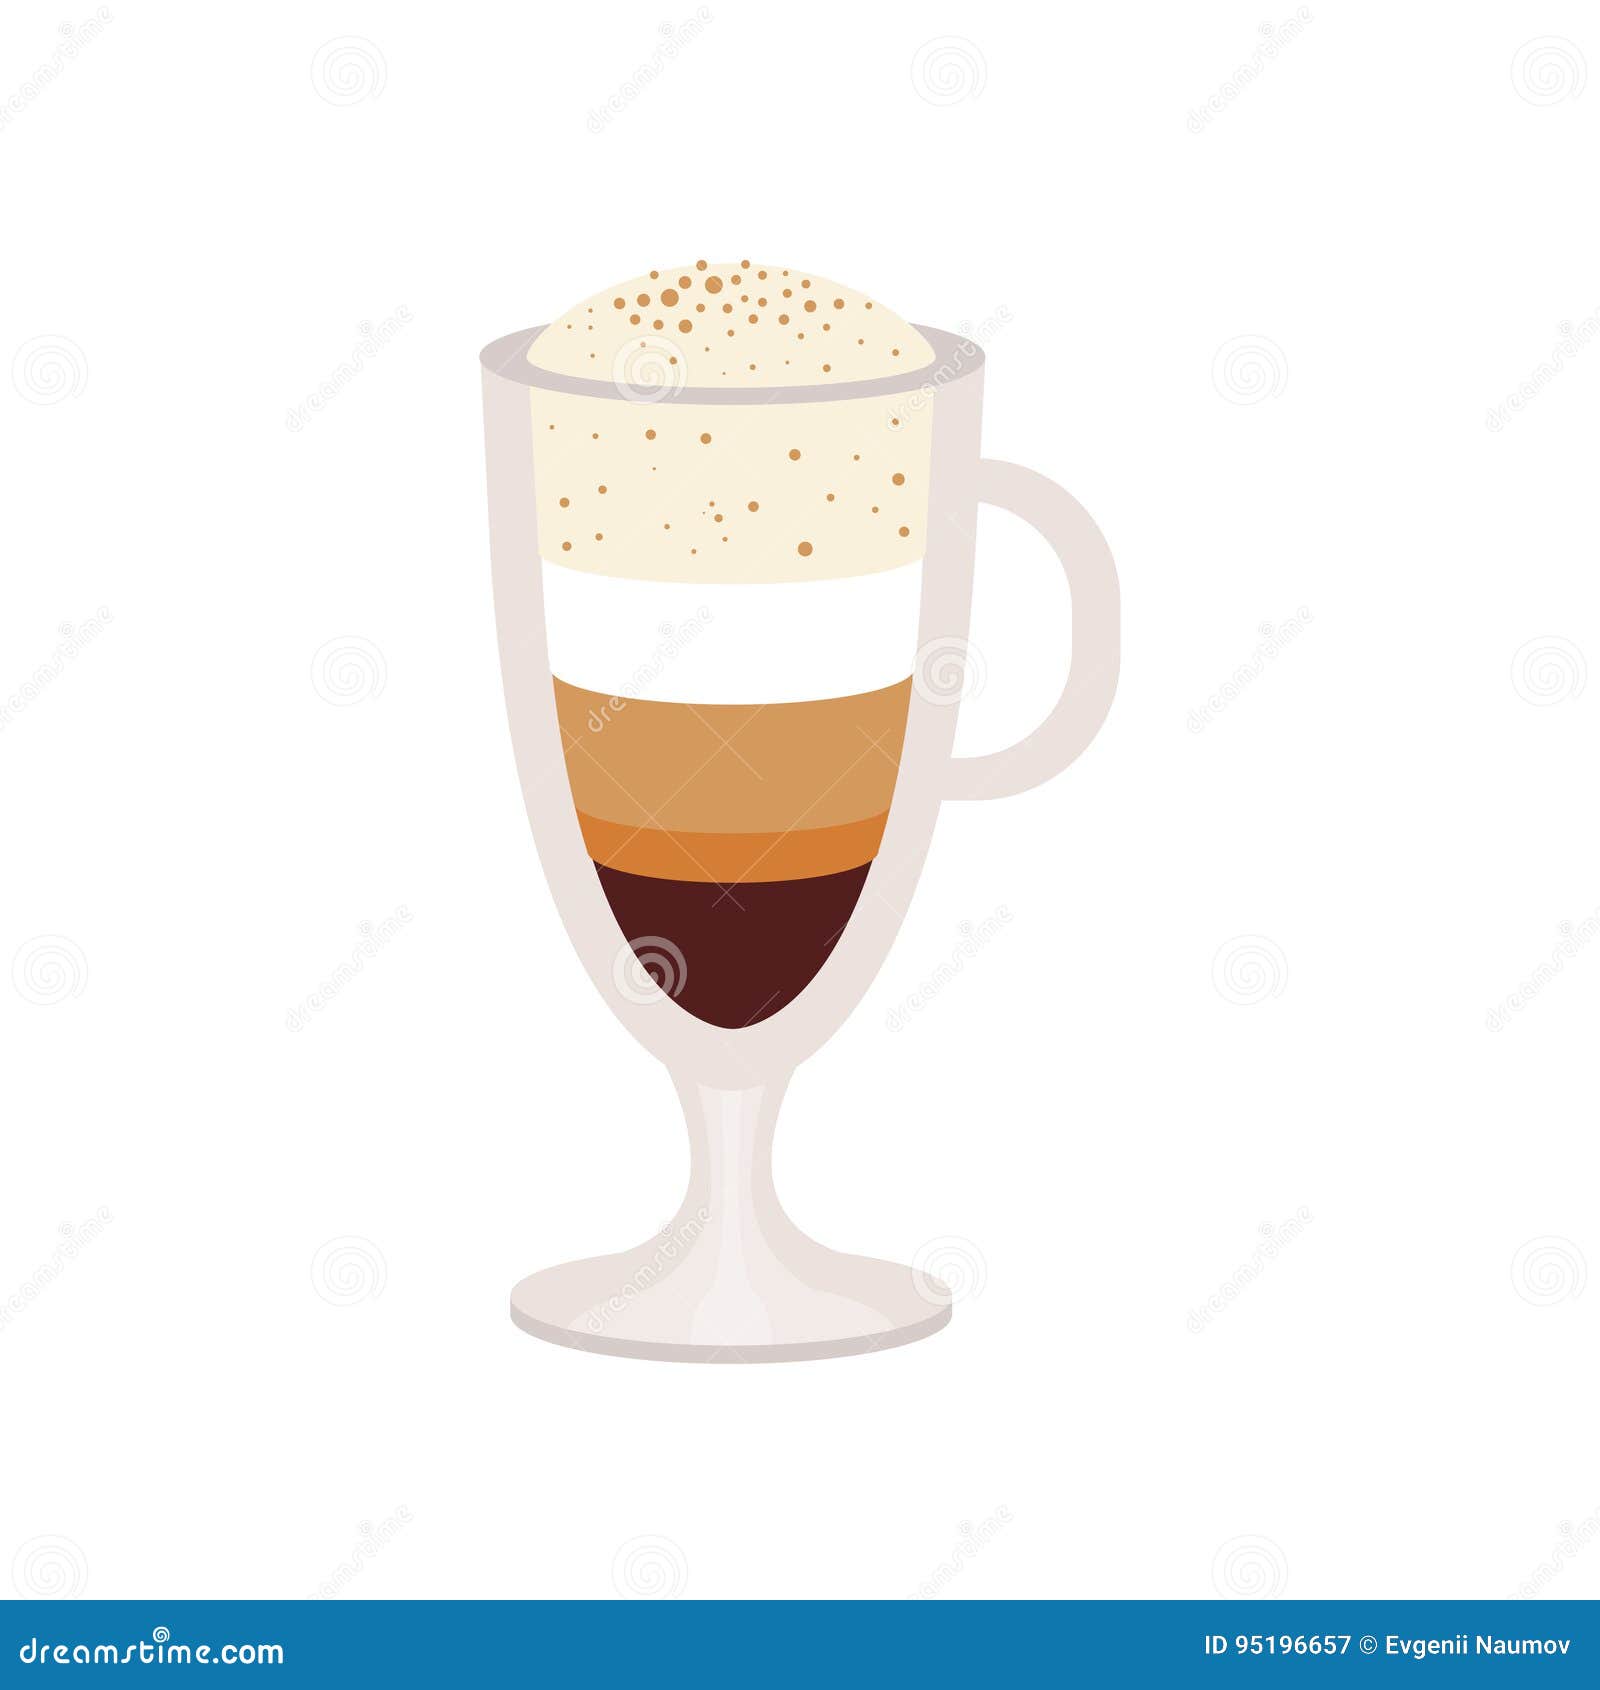 Latte macchiato layered coffee glass cartoon Vector Image